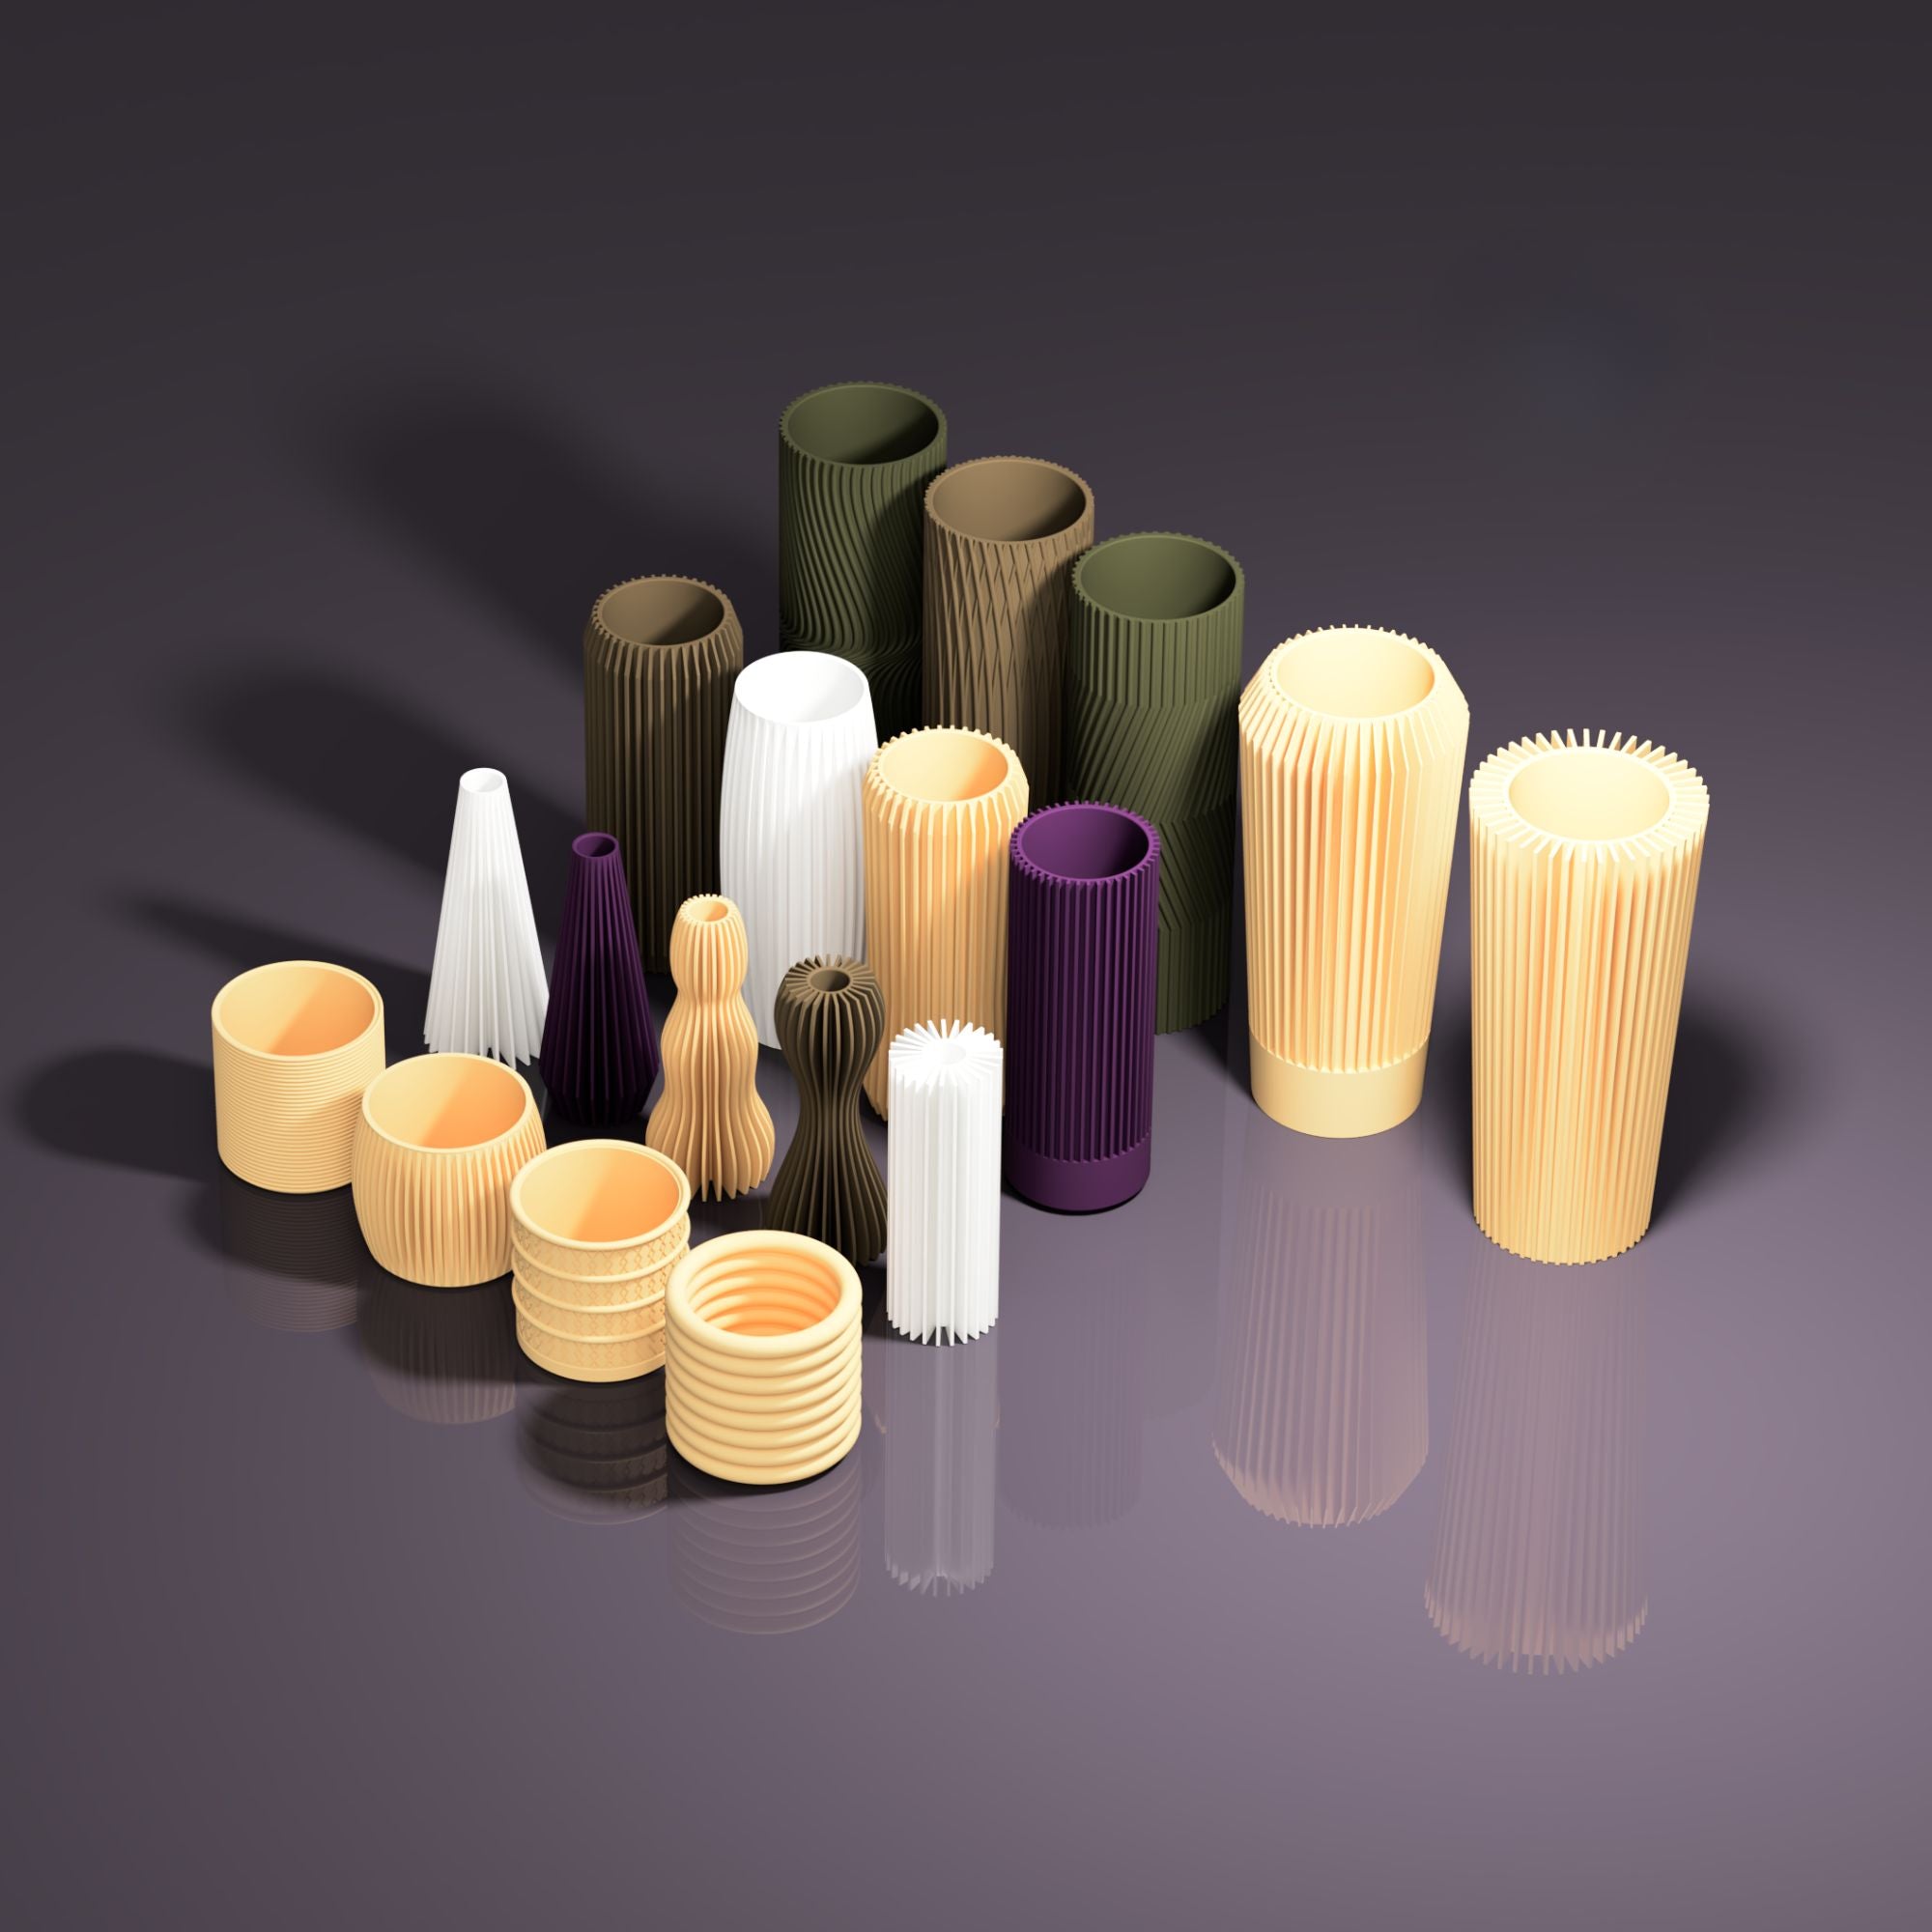 STL Vases Design Pack 18 3D Files - Unique design for your home